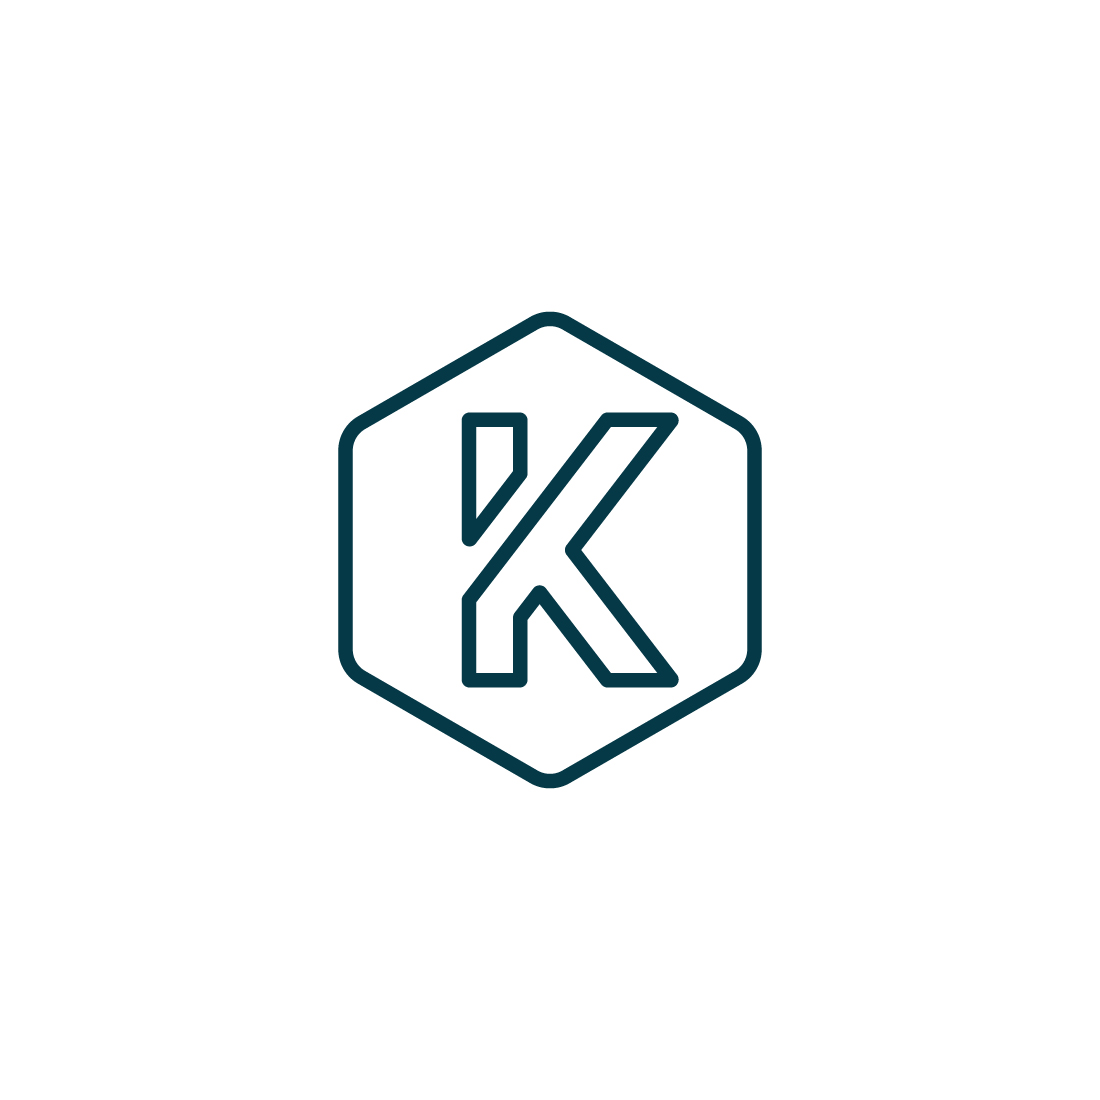 Letter K Logo Design cover image.